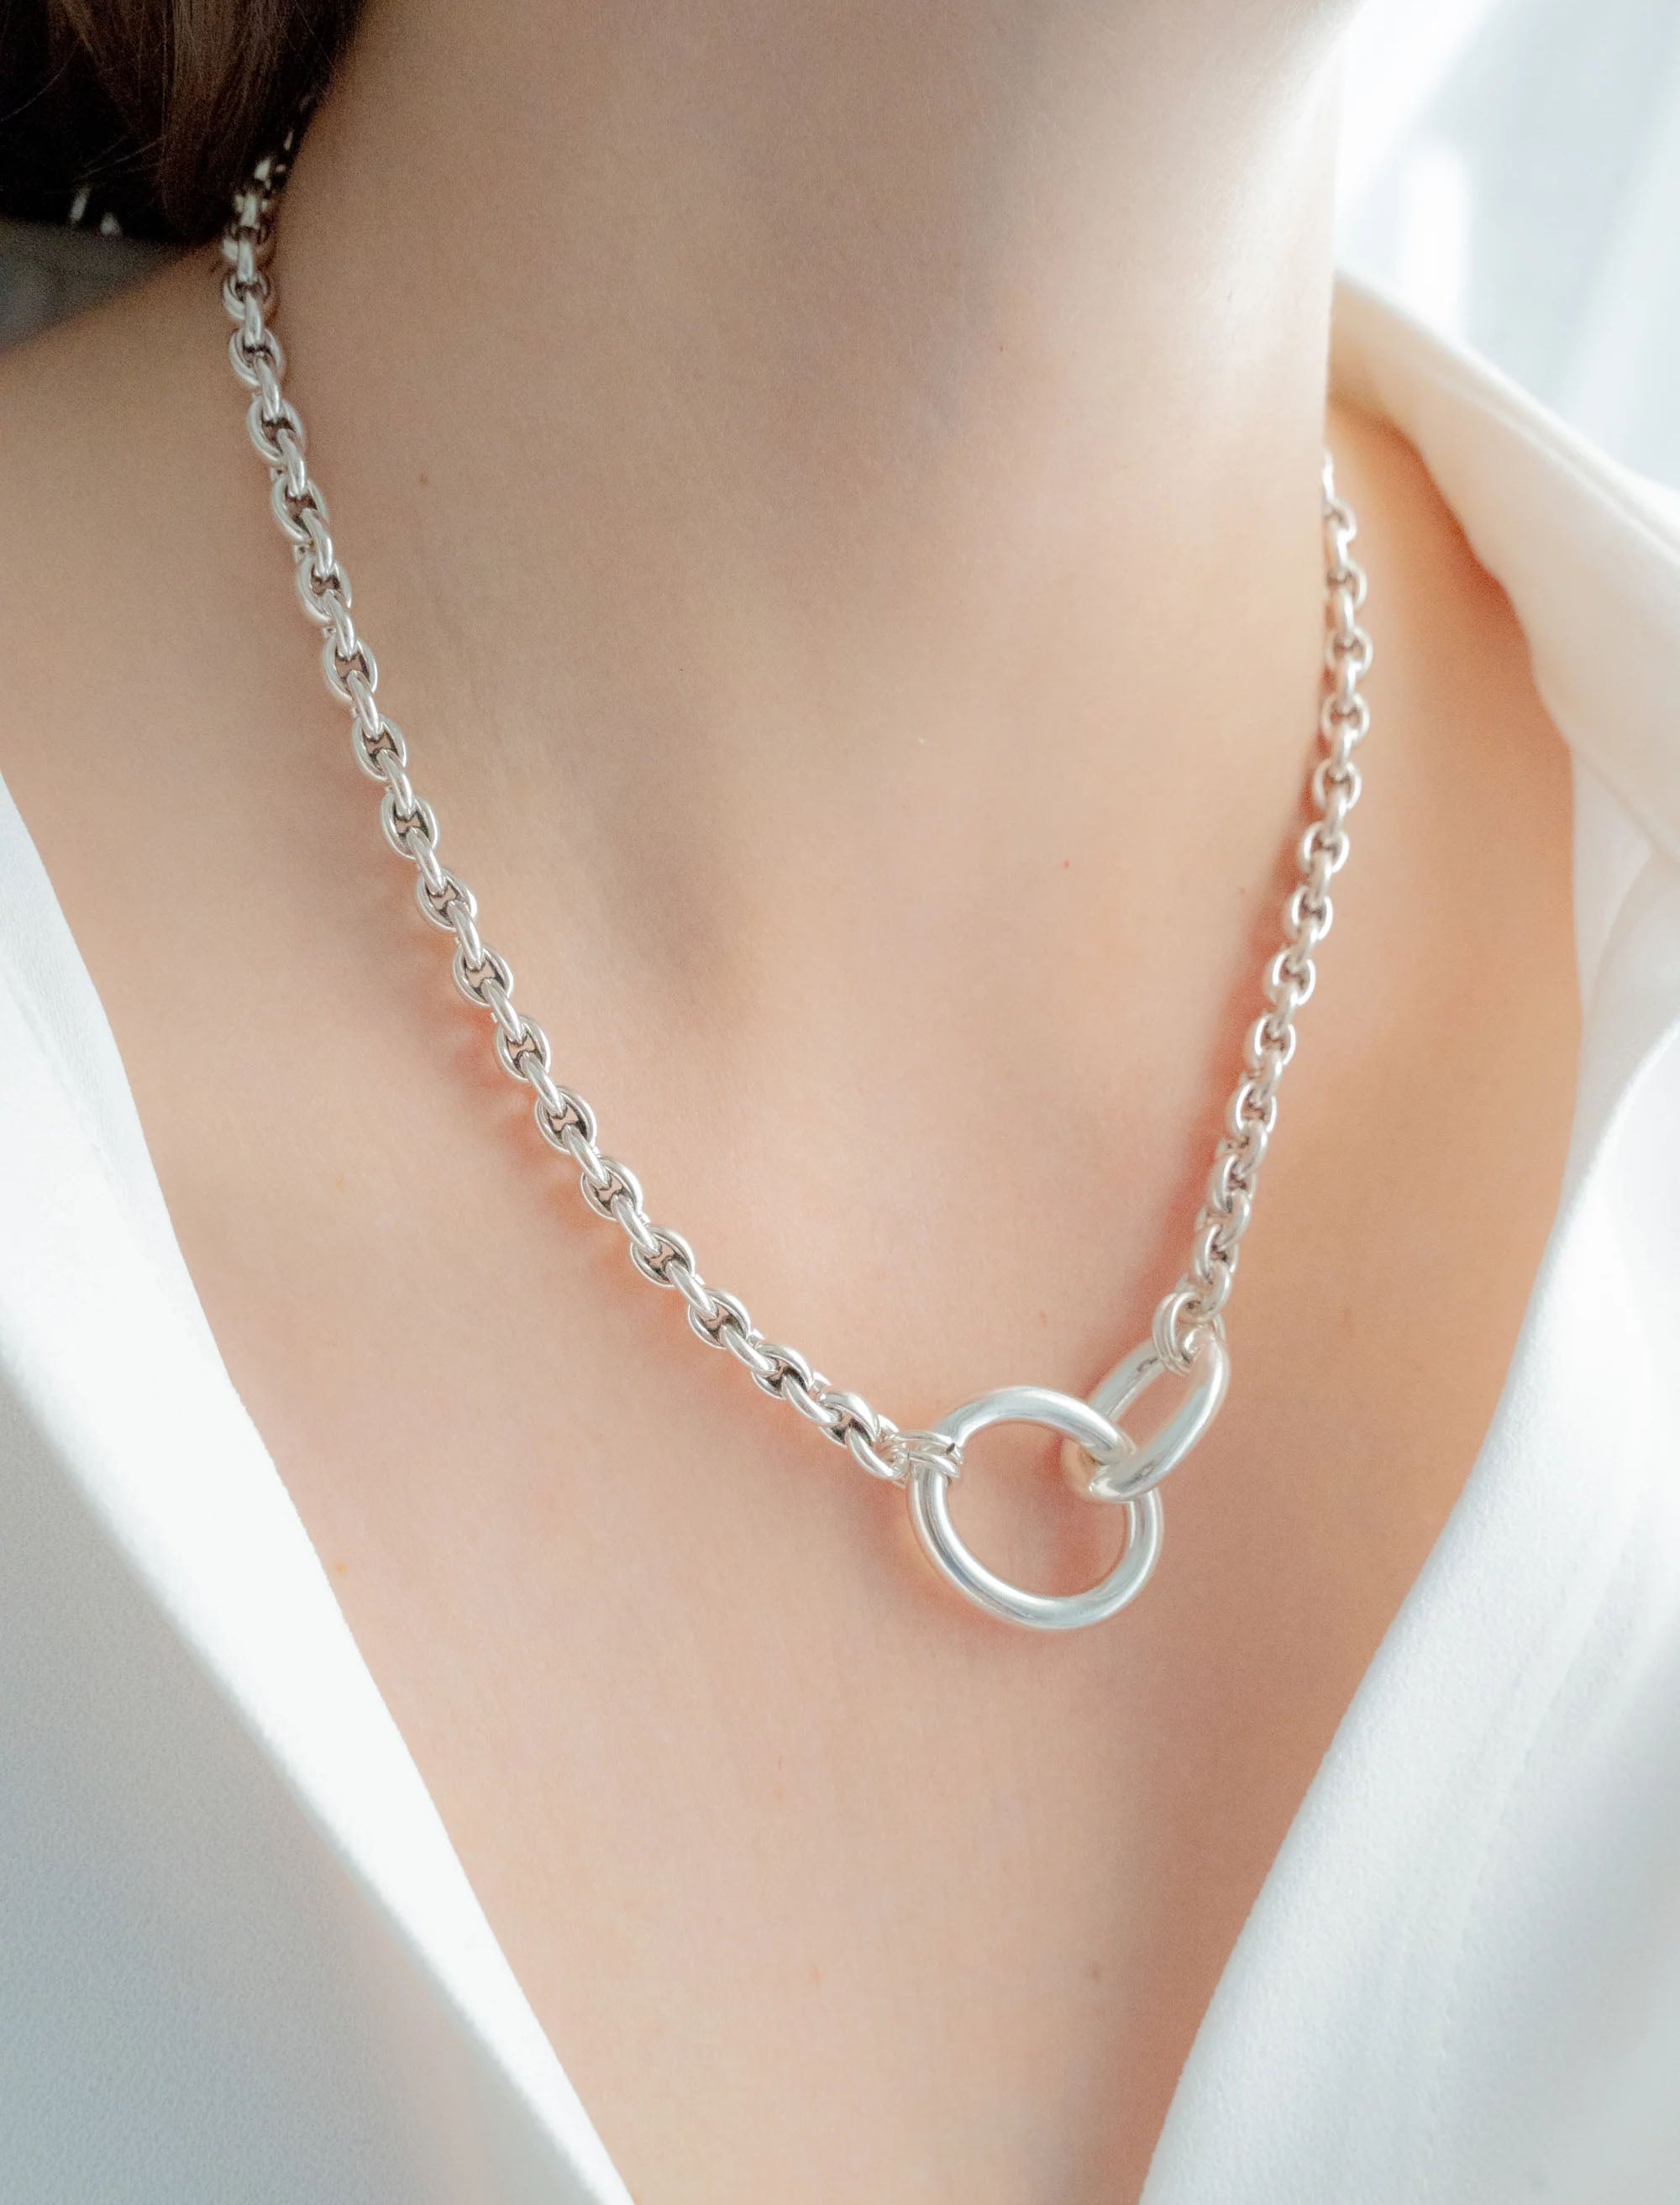 〔Philippe Audibert〕Emma necklace / SILVER